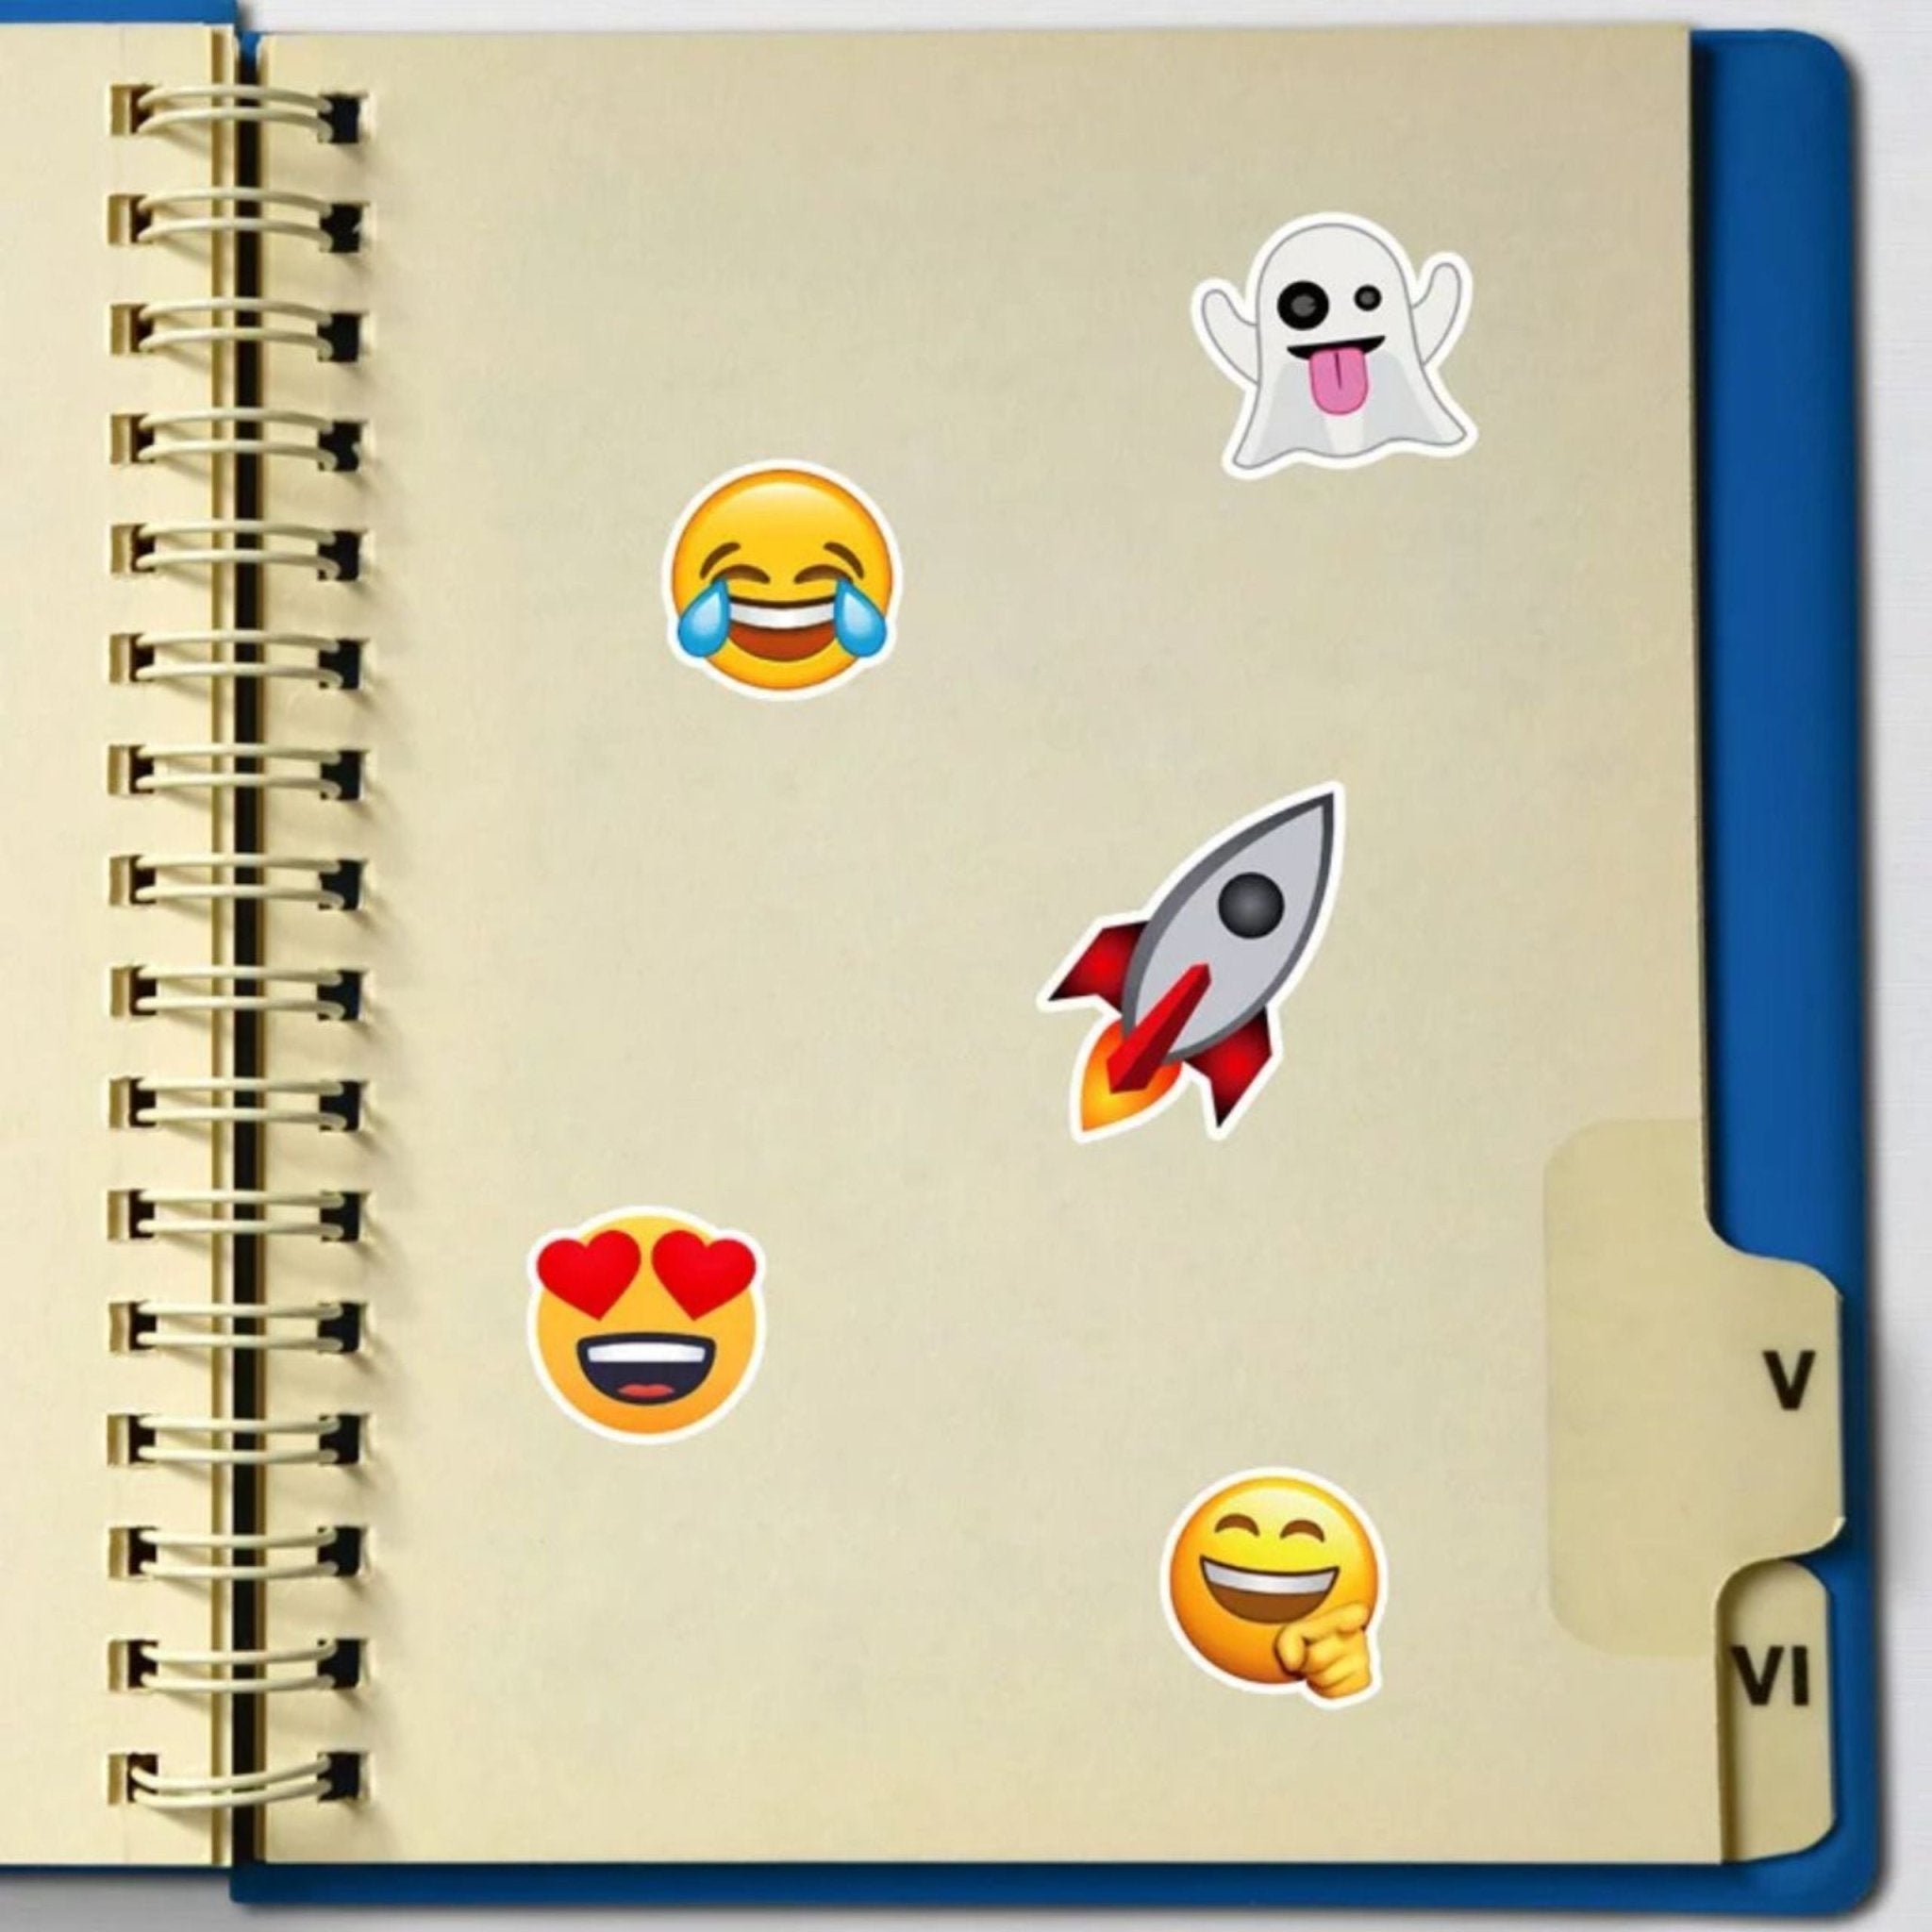 Sticker Emojis Book 12 Pages - 100pc